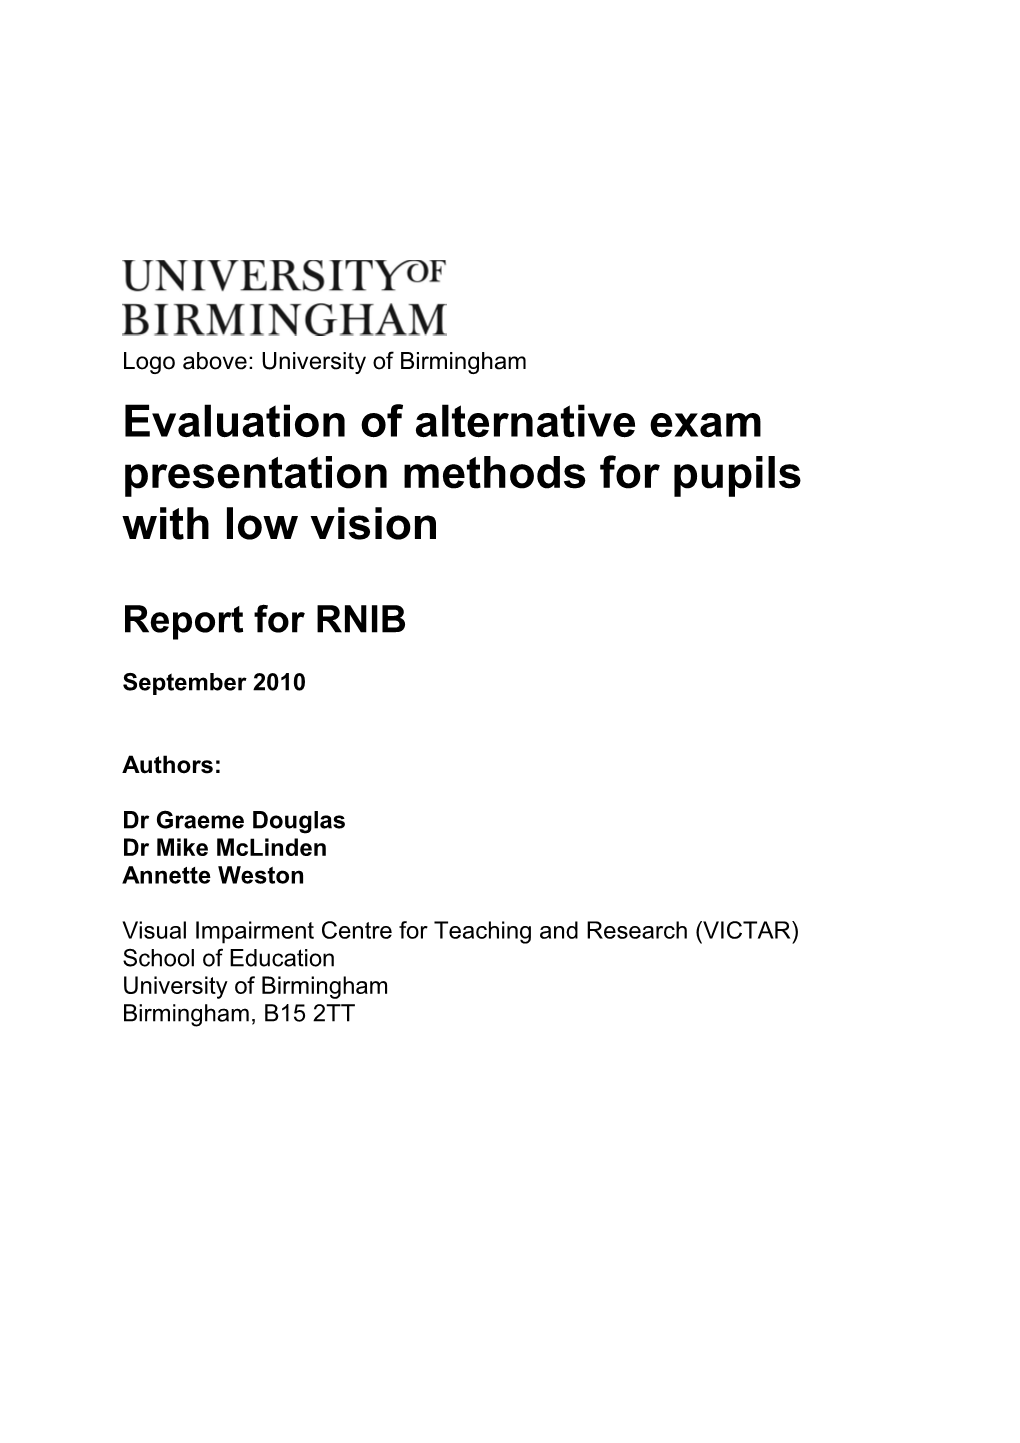 Evaluation of Alternate Exams Presentation